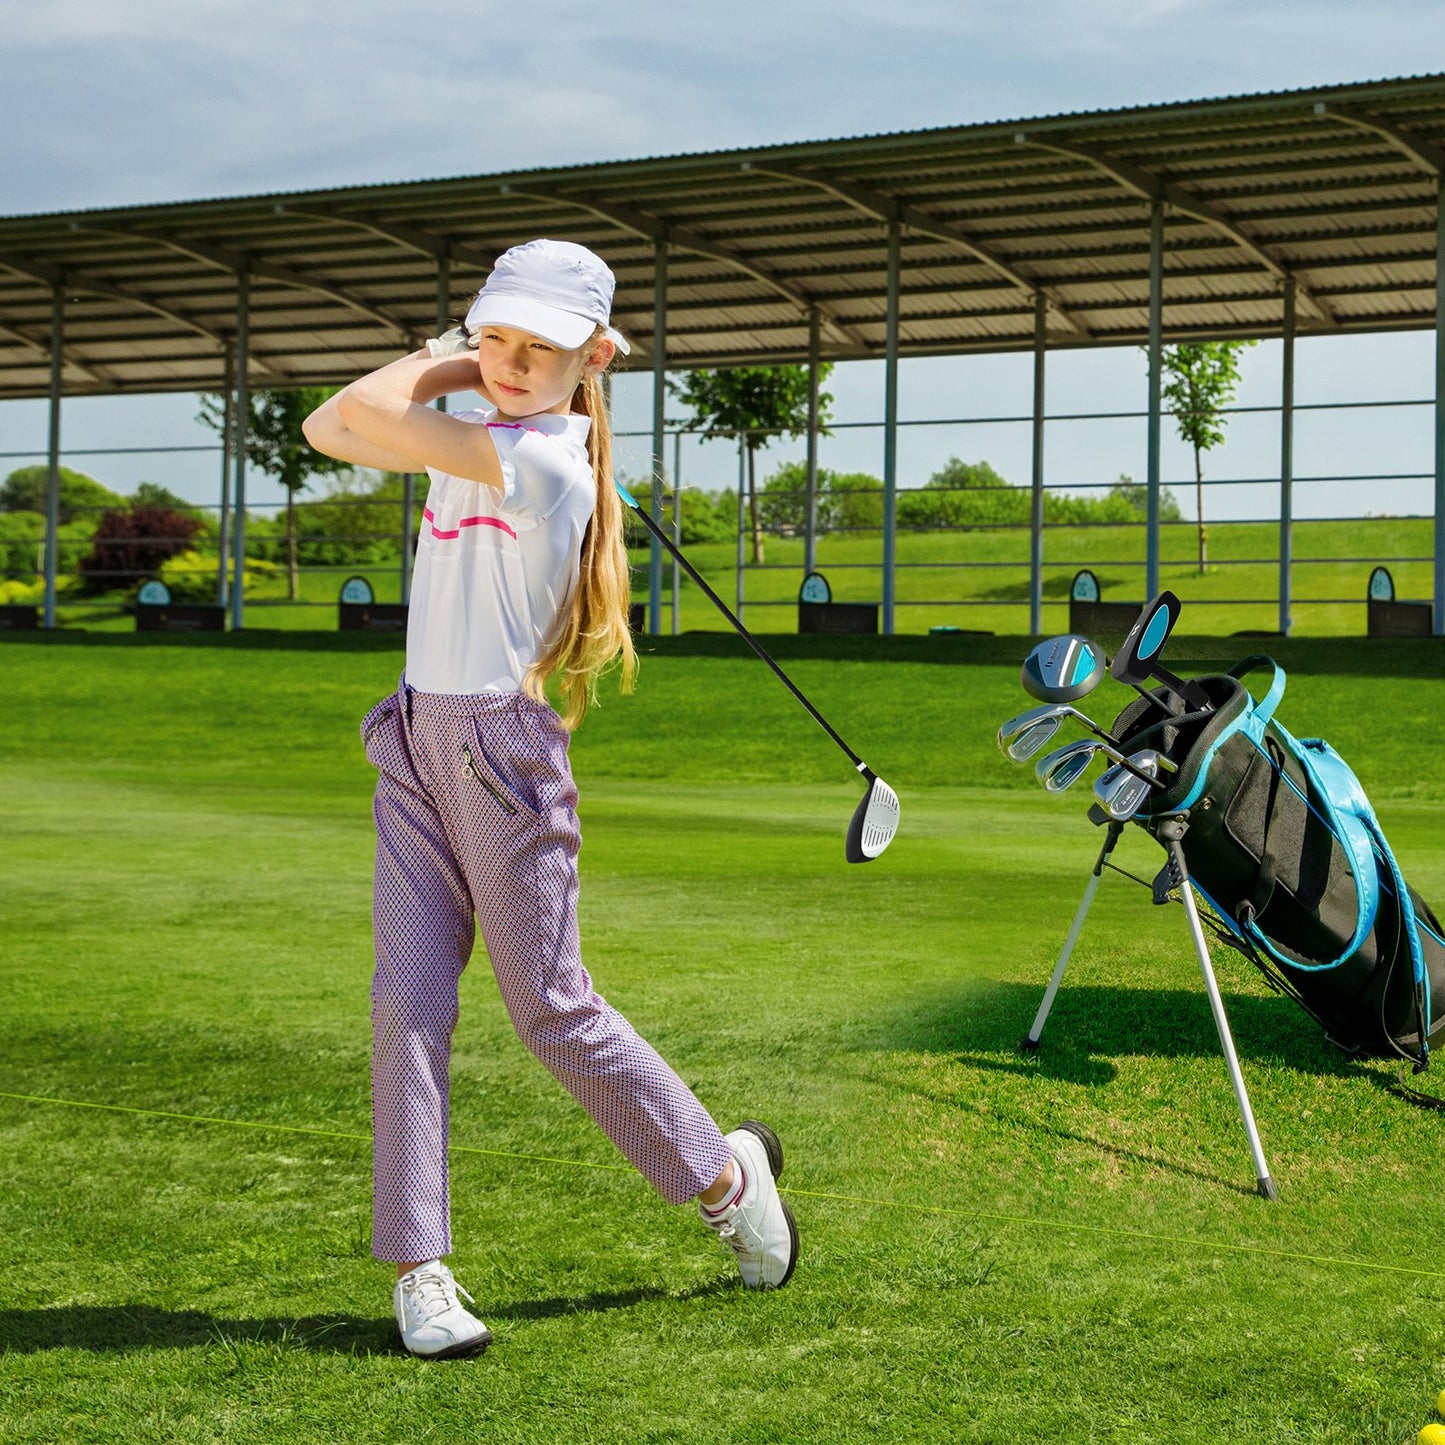 Junior Complete Golf Club Set with Stand Bag Rain Hood, Blue